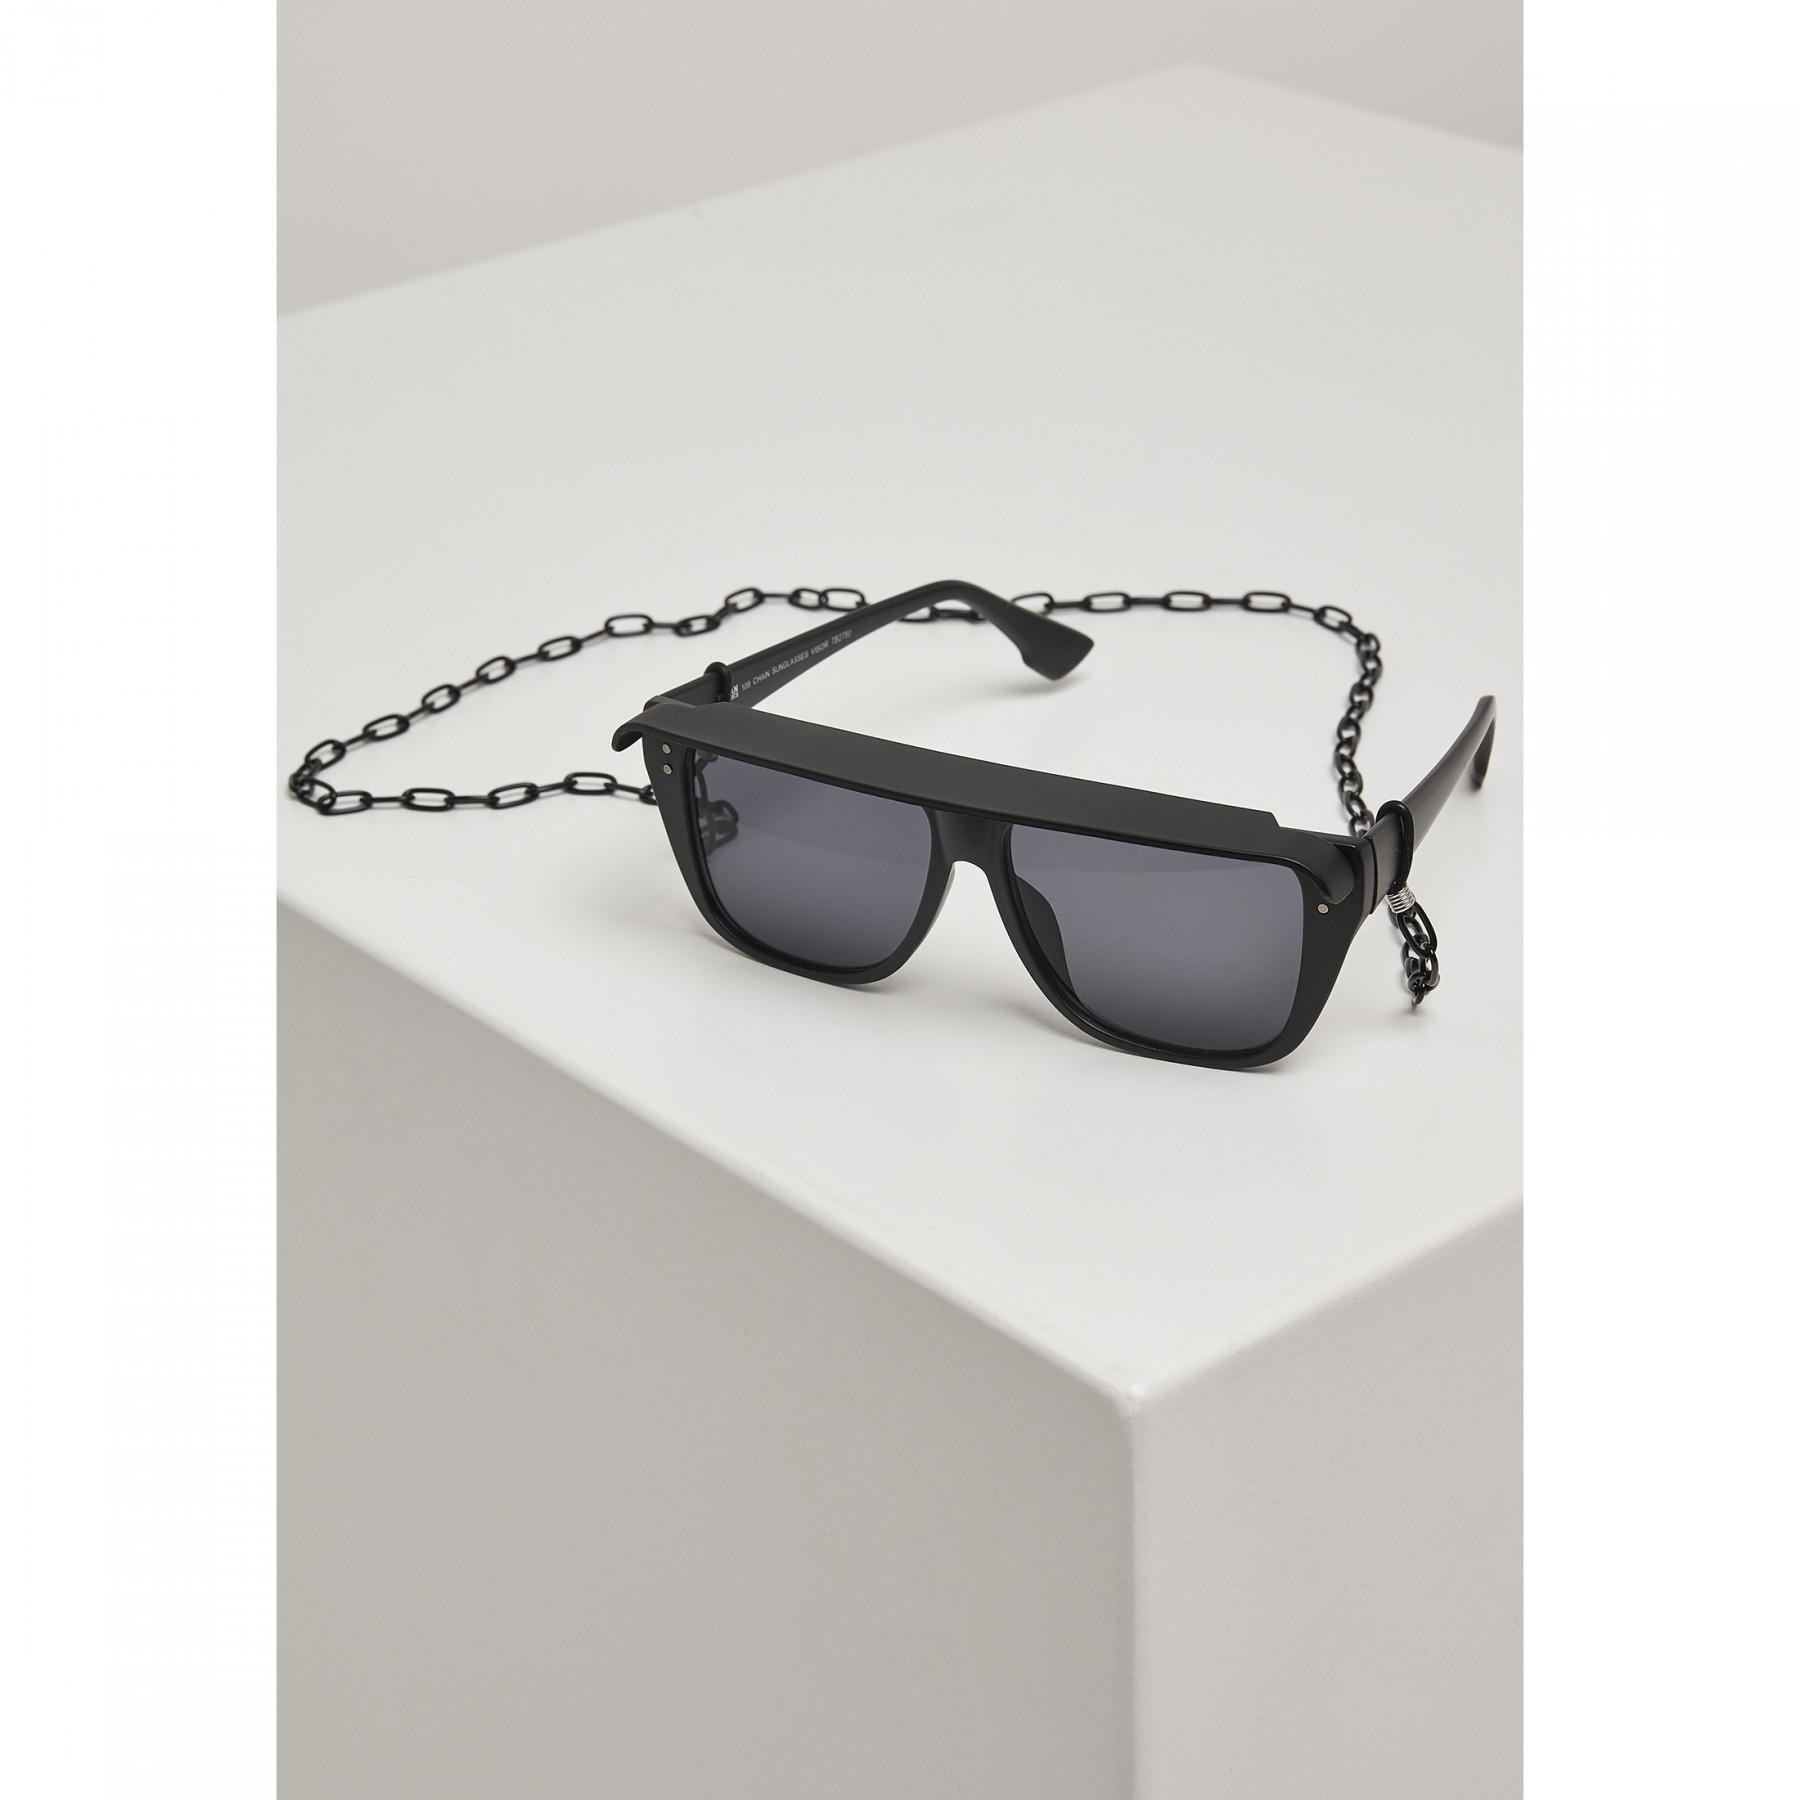 Urban Classic 108 visor sunglasses